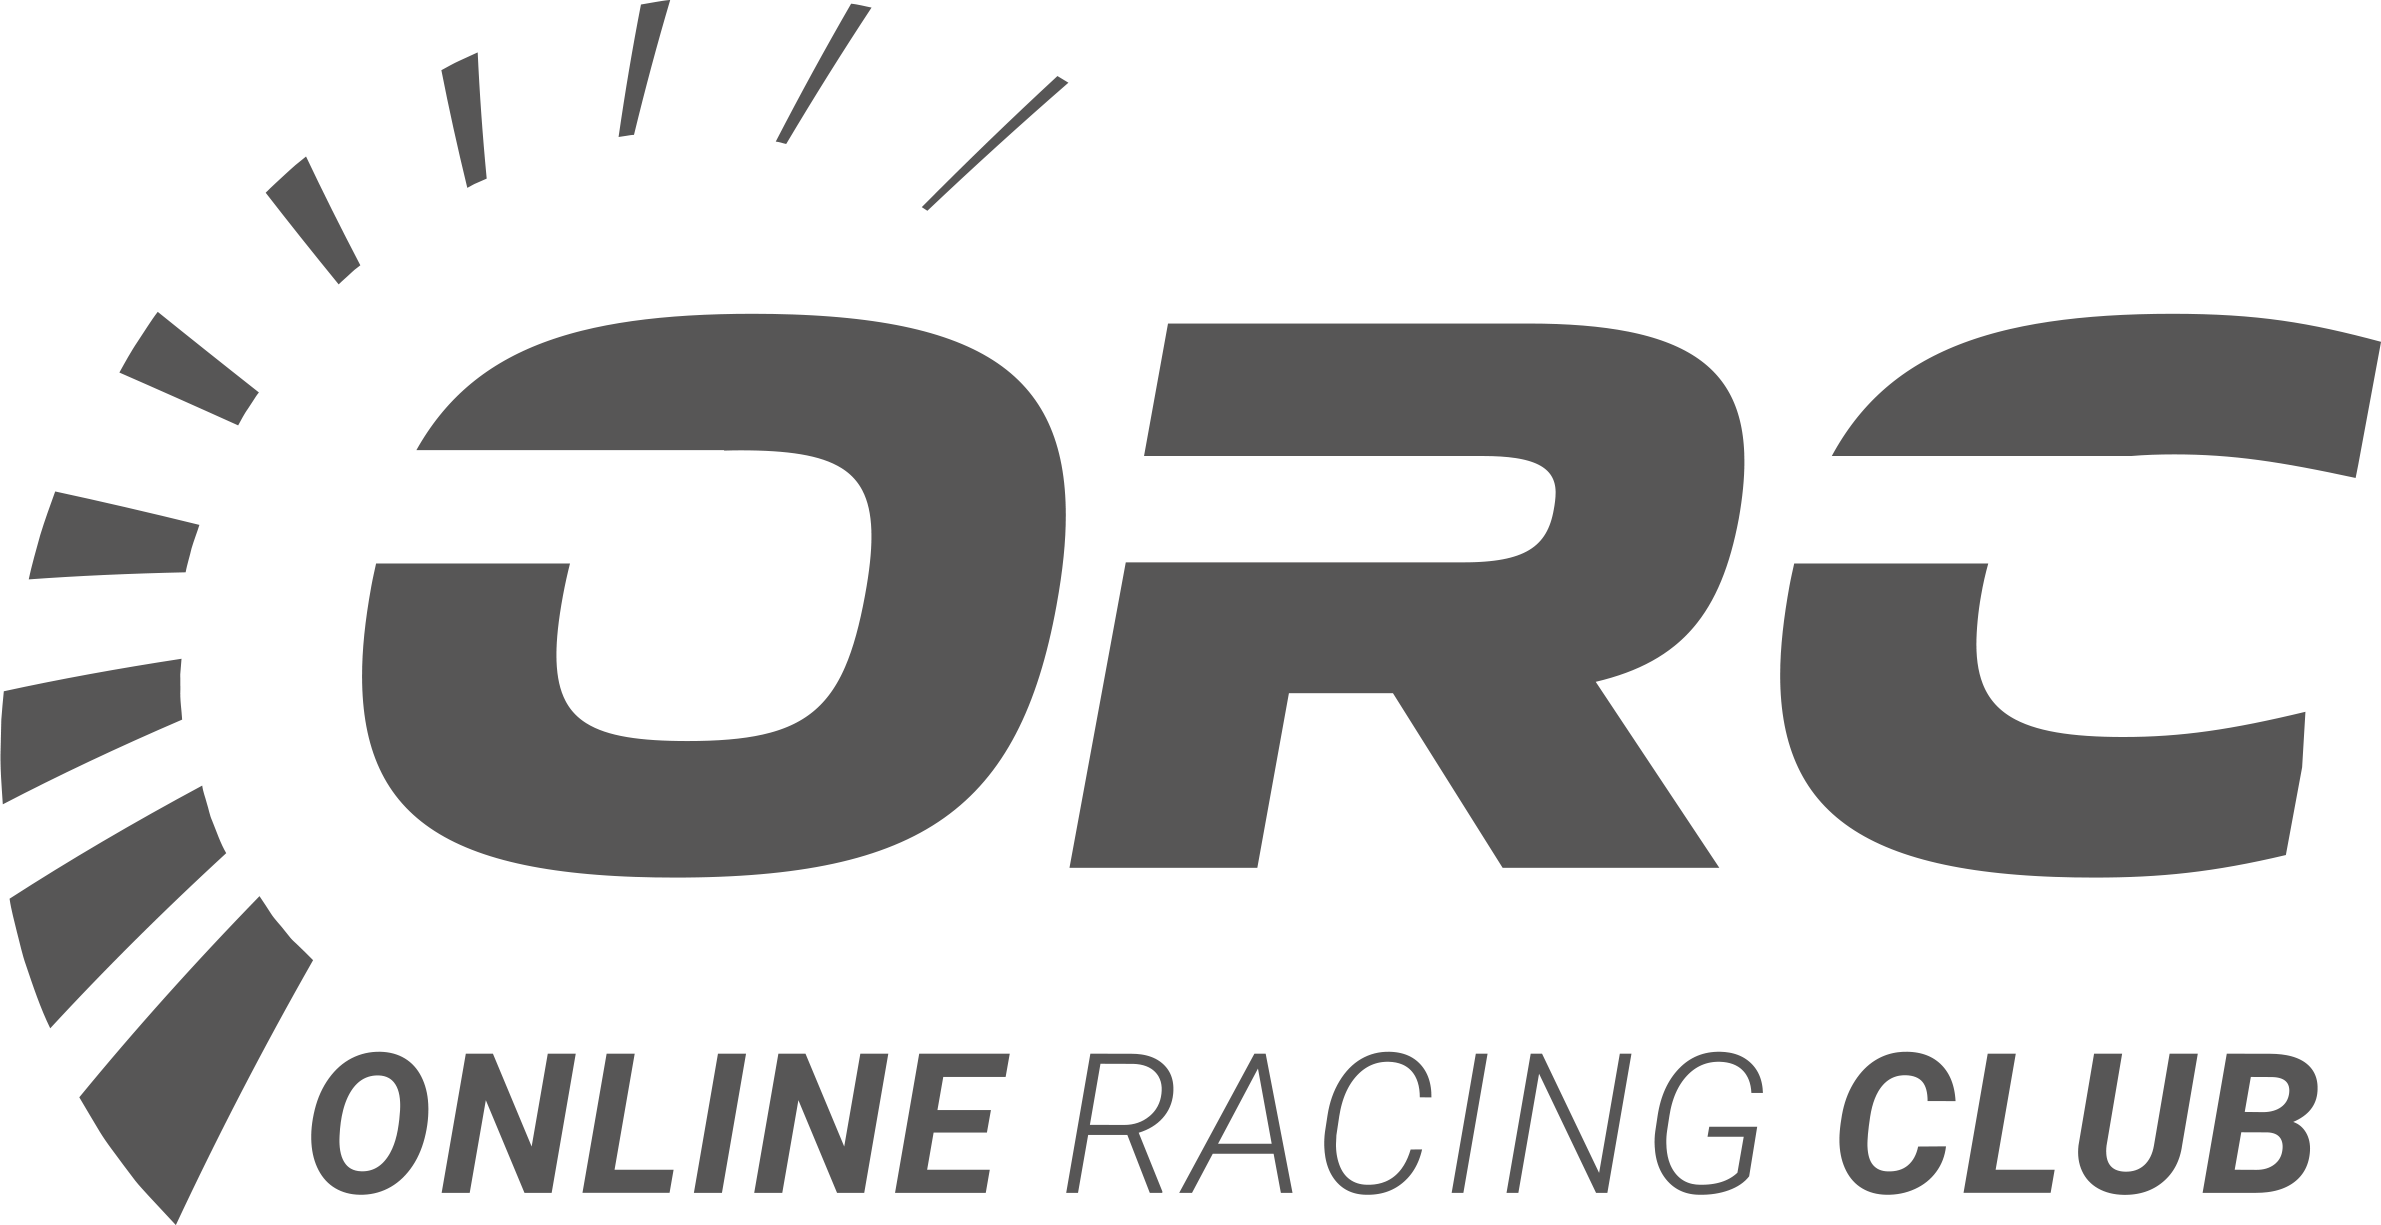 f1 2014, f1 2021, f1 2020, online racing, online liga, online racing club, neuer Name